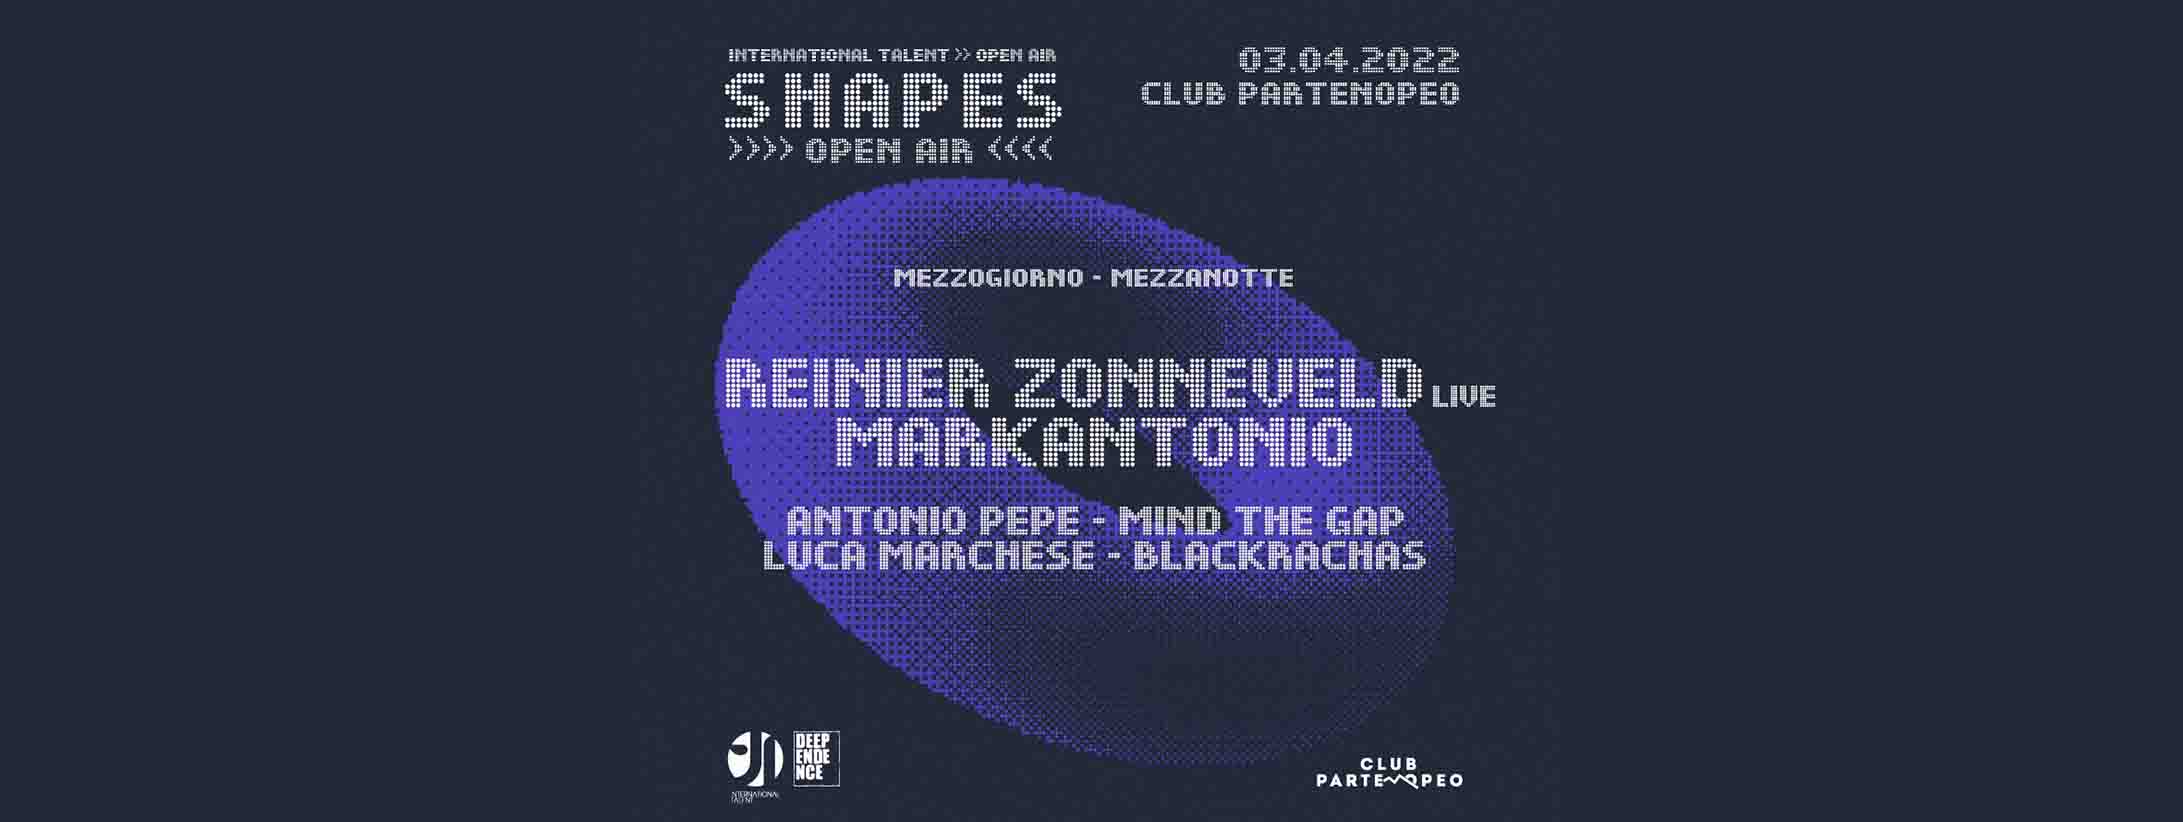 shapes-club partenopeo-zonneveld-03-04-2022